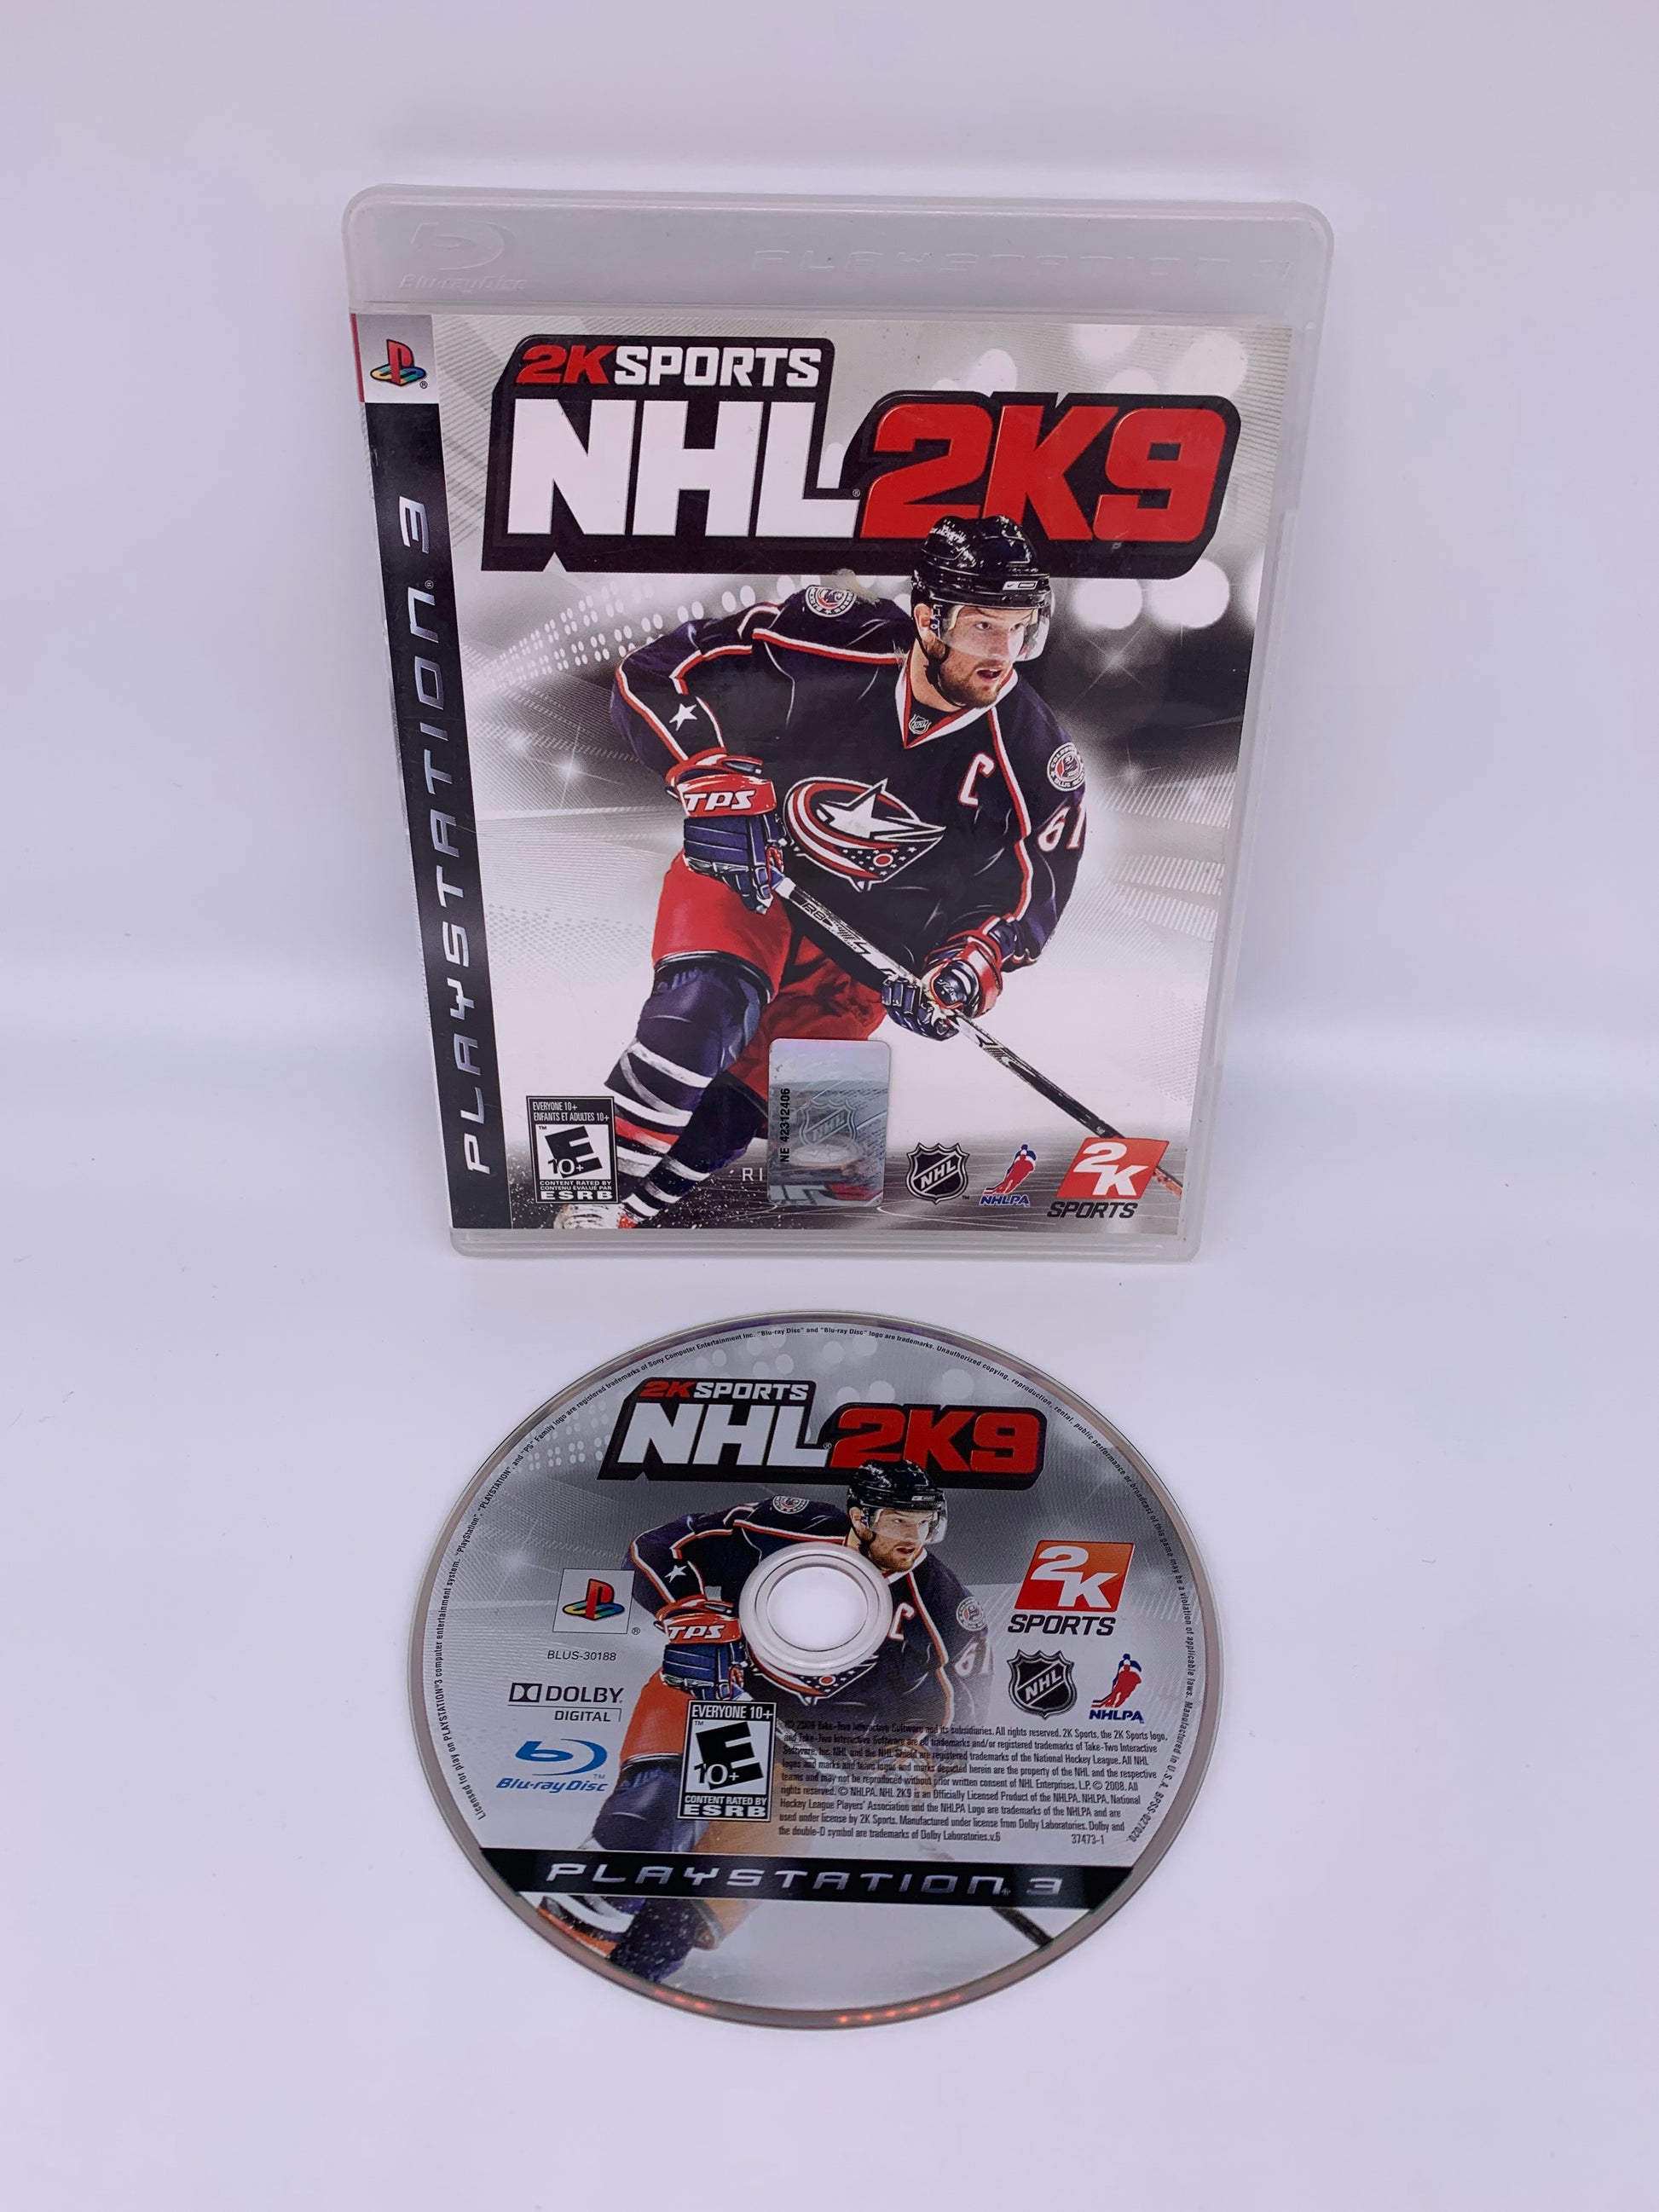 PiXEL-RETRO.COM : SONY PLAYSTATION 3 (PS3) COMPLET CIB BOX MANUAL GAME NTSC NHL 2K9